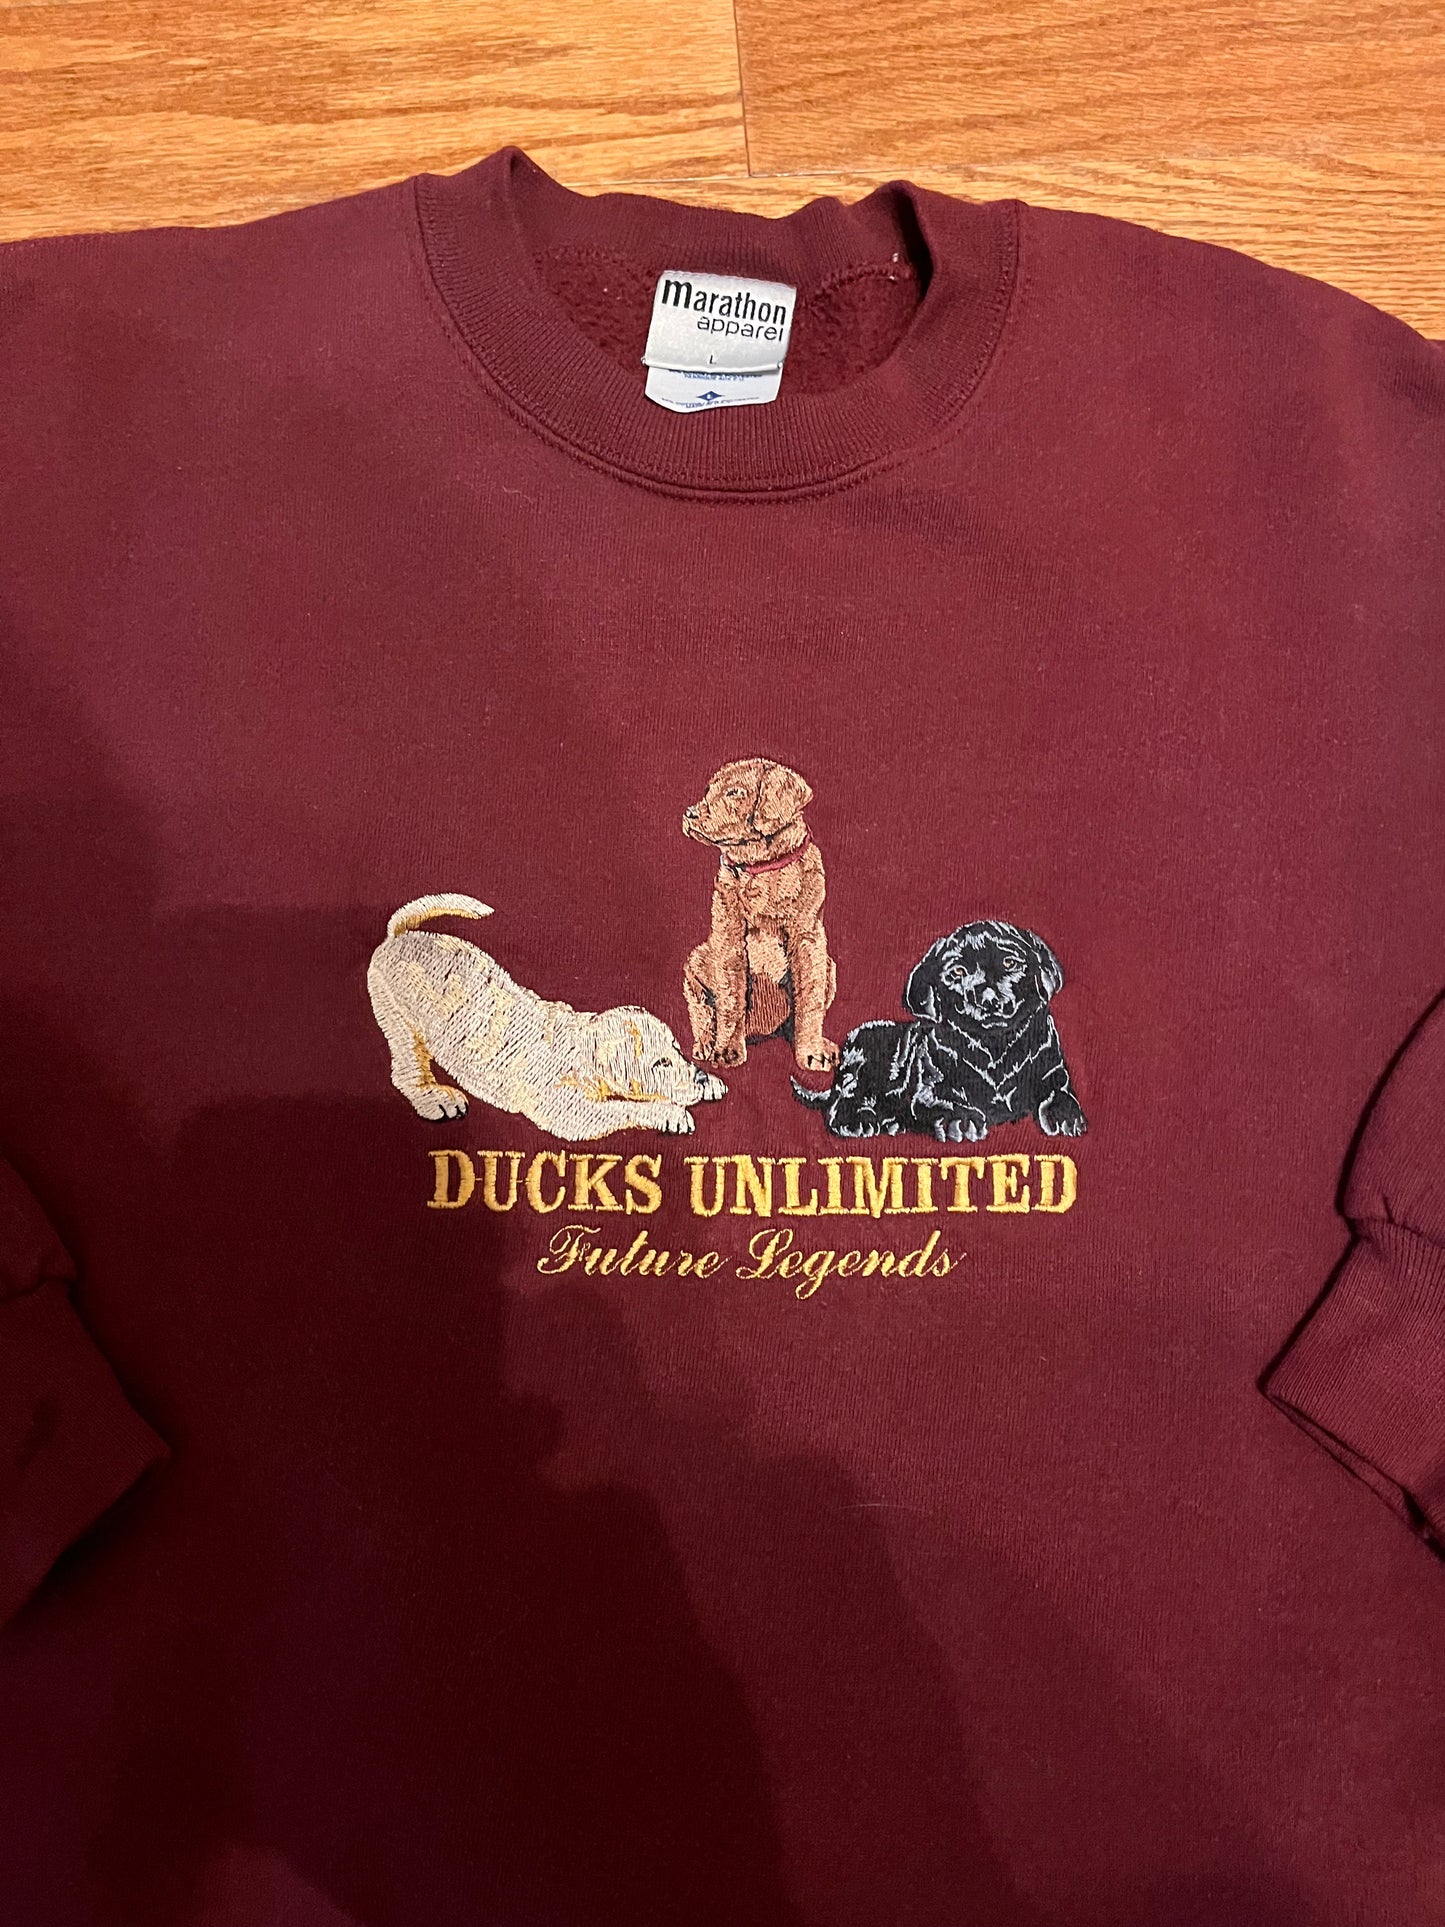 Ducks Unlimited “Future Legends”